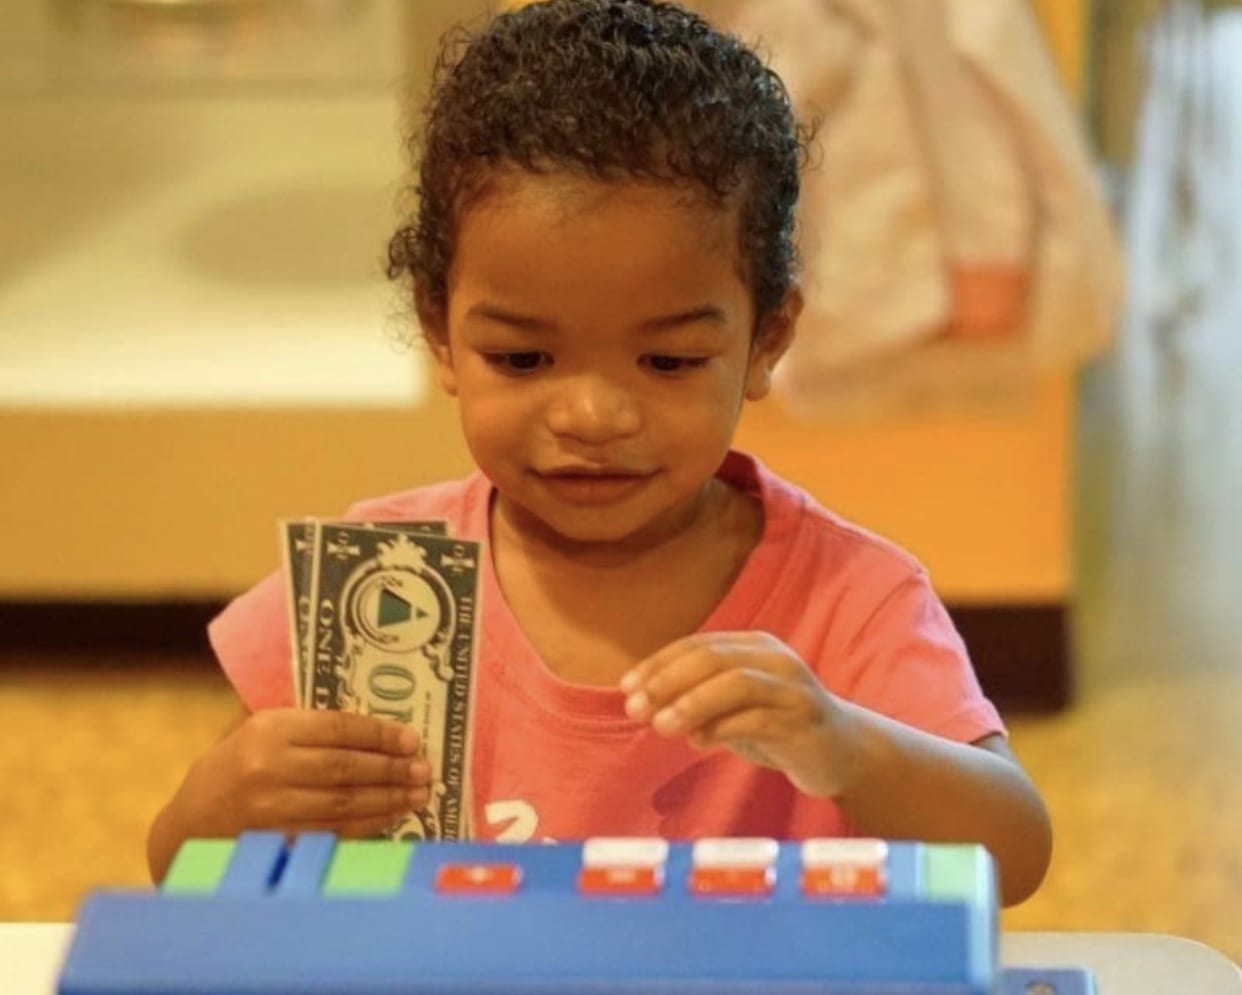 Kid putting play money into cash register in exhibit.